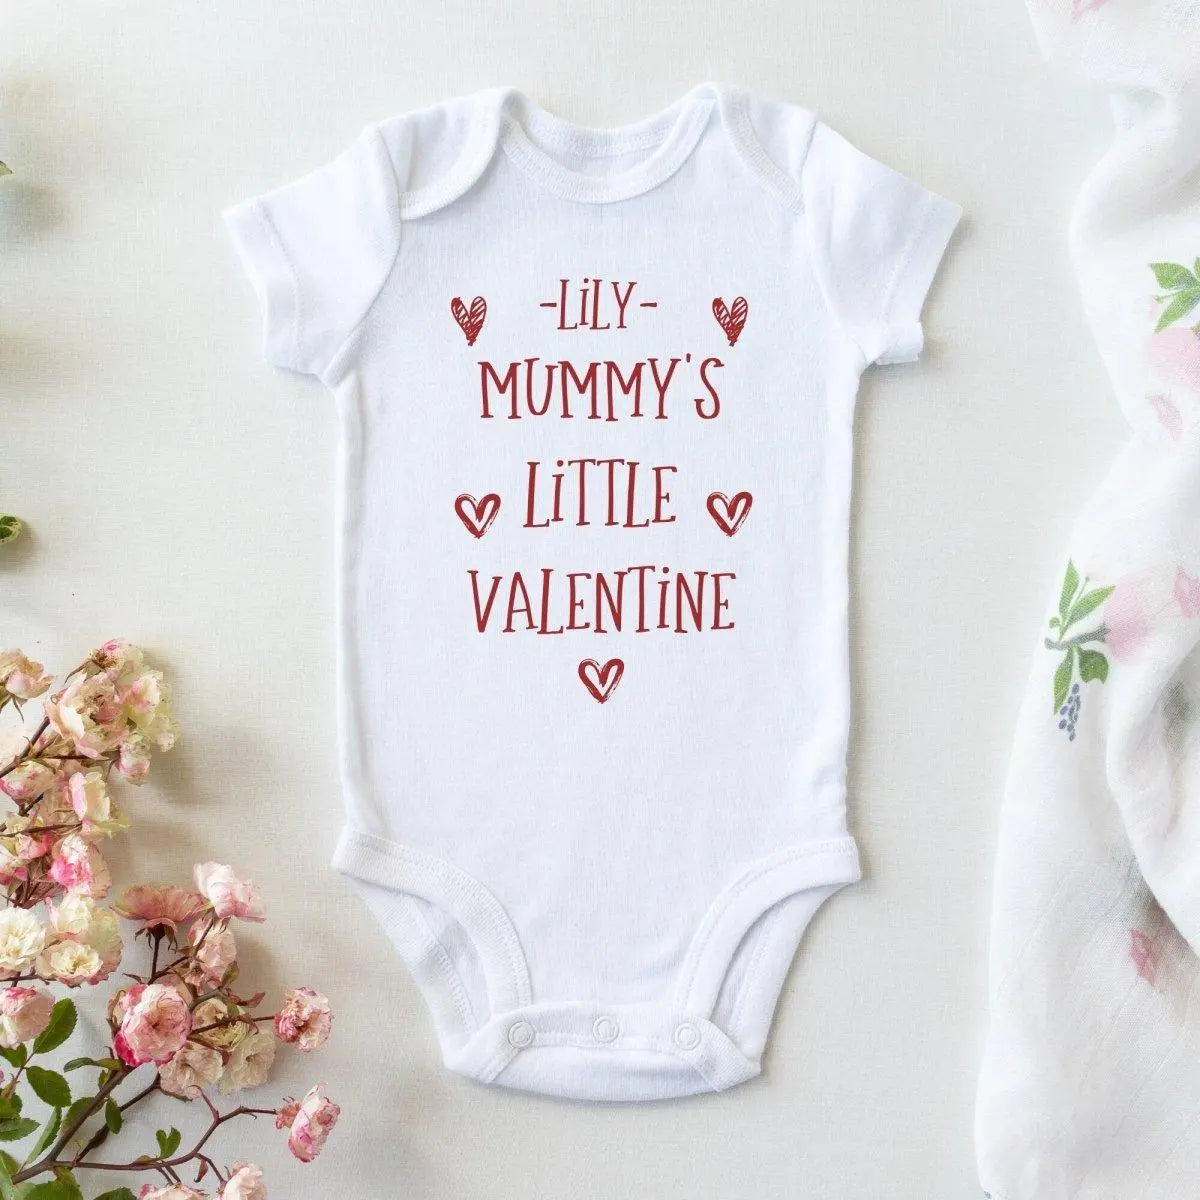 Little Valentine Baby Vest, Baby&#39;s 1st Valentines, My First Valentines, Mummy&#39;s Little Valentine, Baby Bodysuit, Baby Grow, New Baby Gift - Amy Lucy